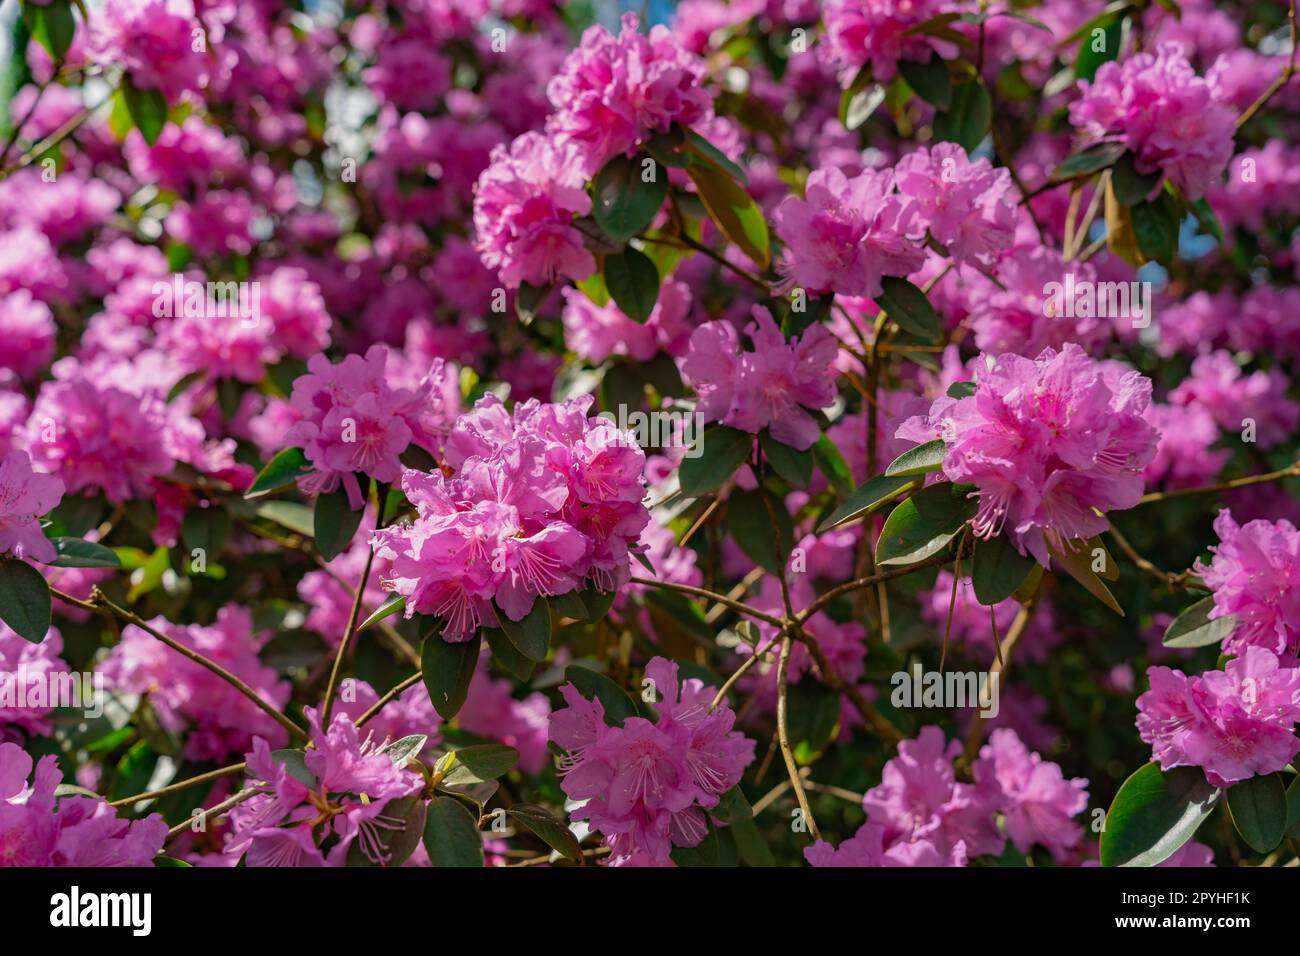 Rhododendron 'PJ Mezitt Elite' with bright purple flowers Stock Photo